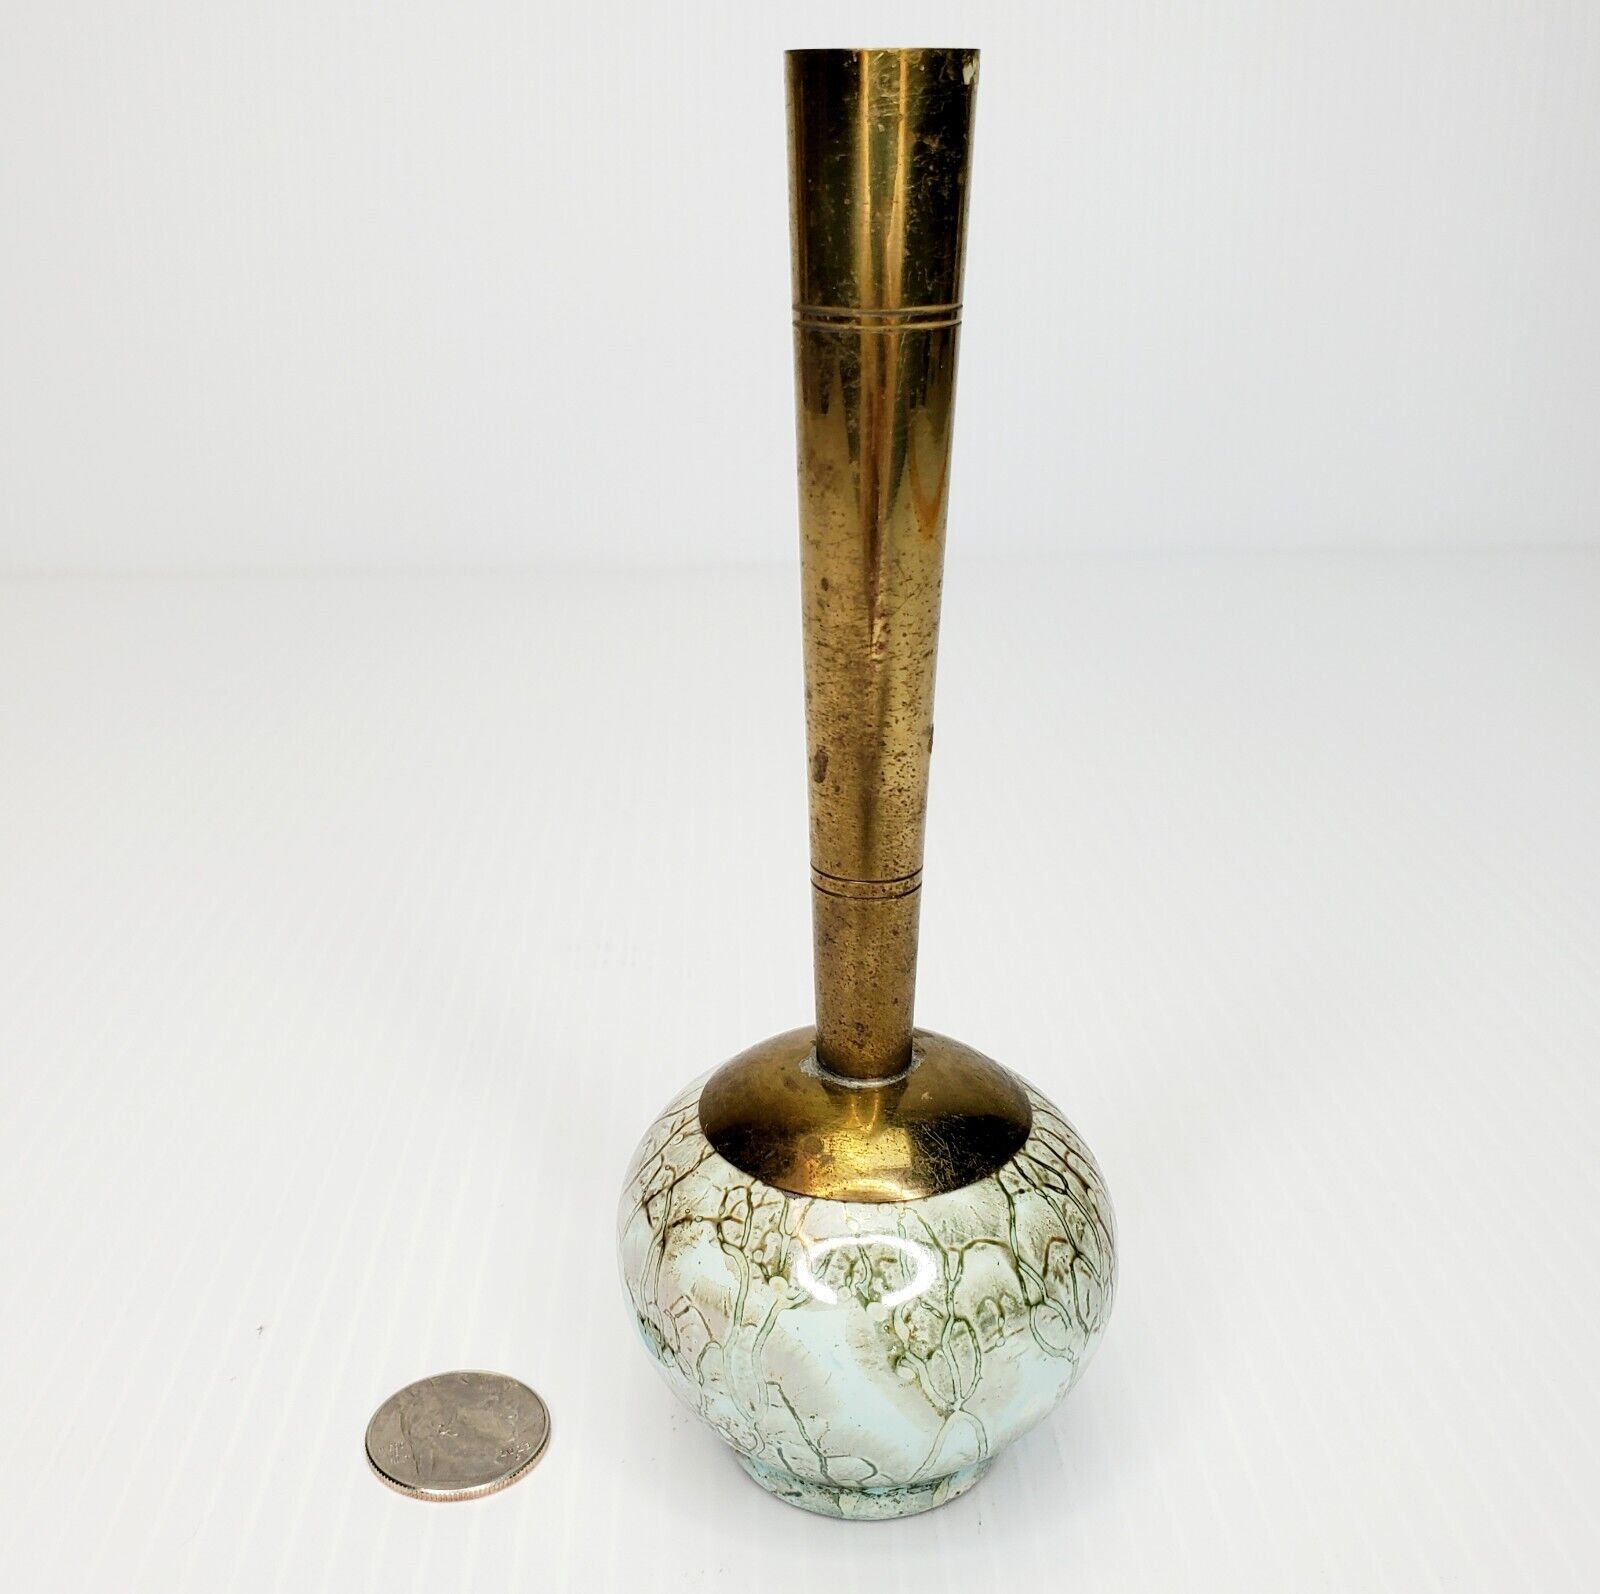 MCM GOUDA Delft Holland bud vase turquoise Ceramic Brass Vintage Kitsch 